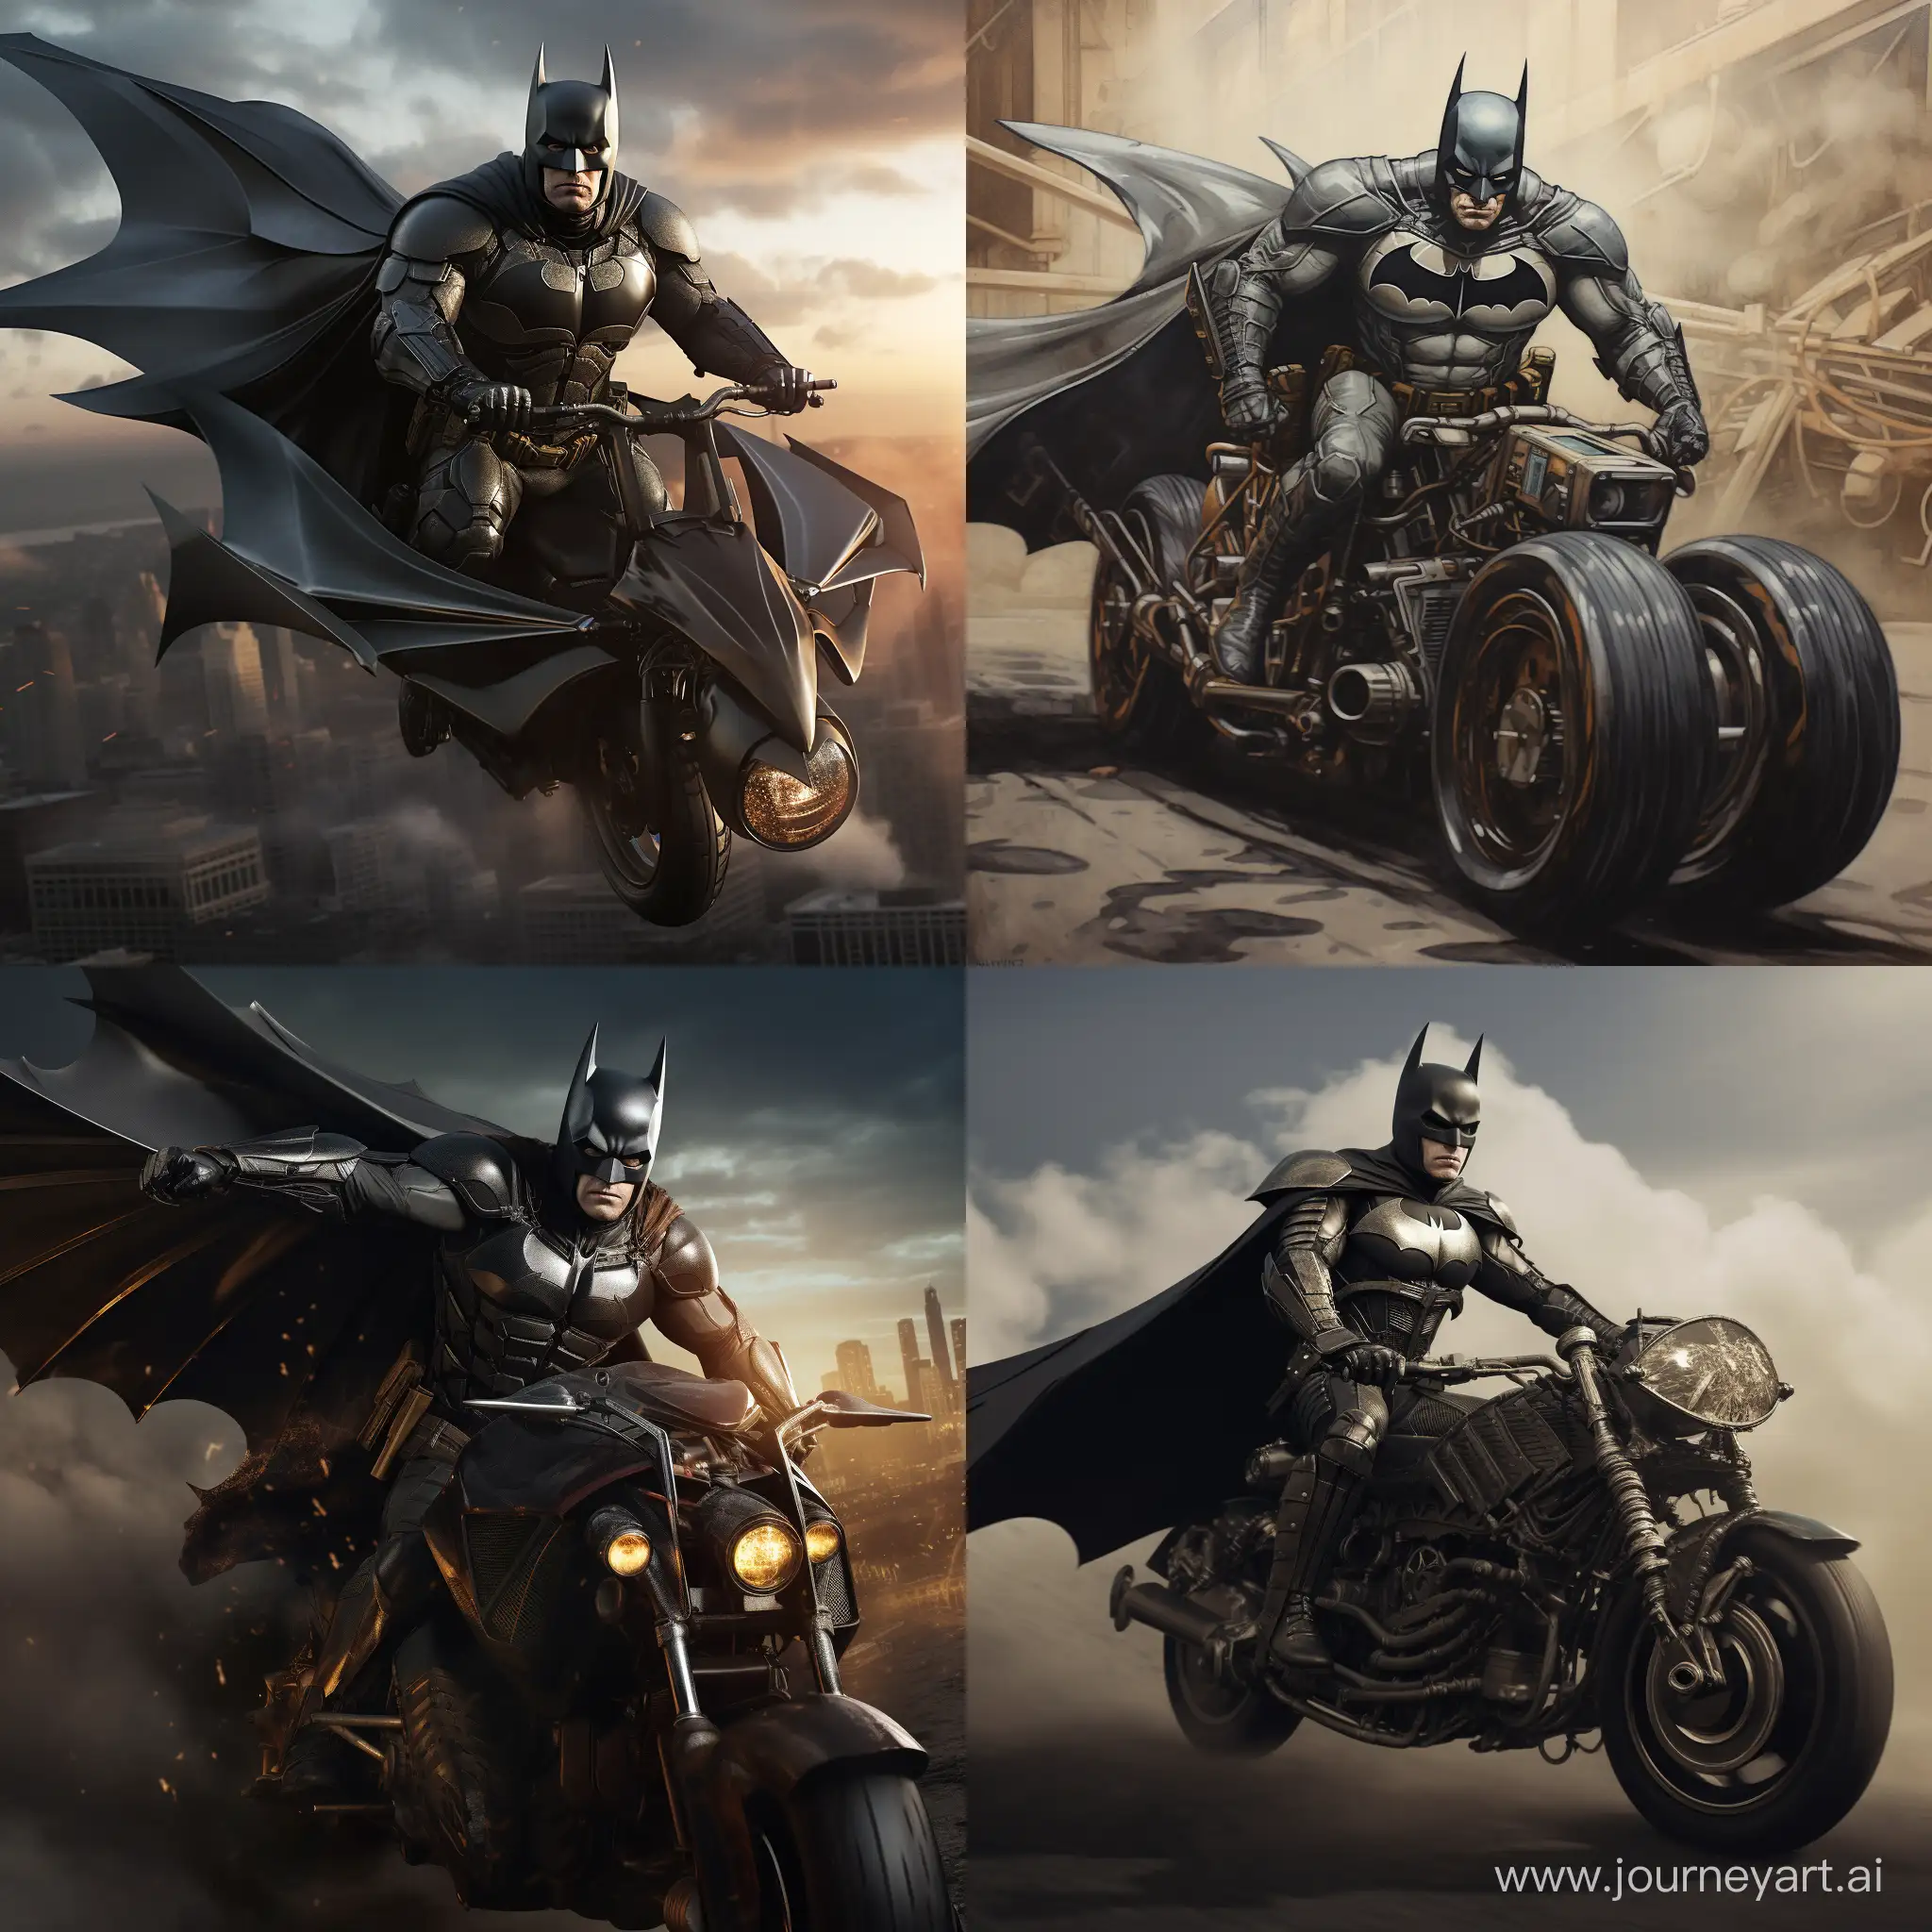 Batman-Soaring-through-the-Skies-on-a-Motor